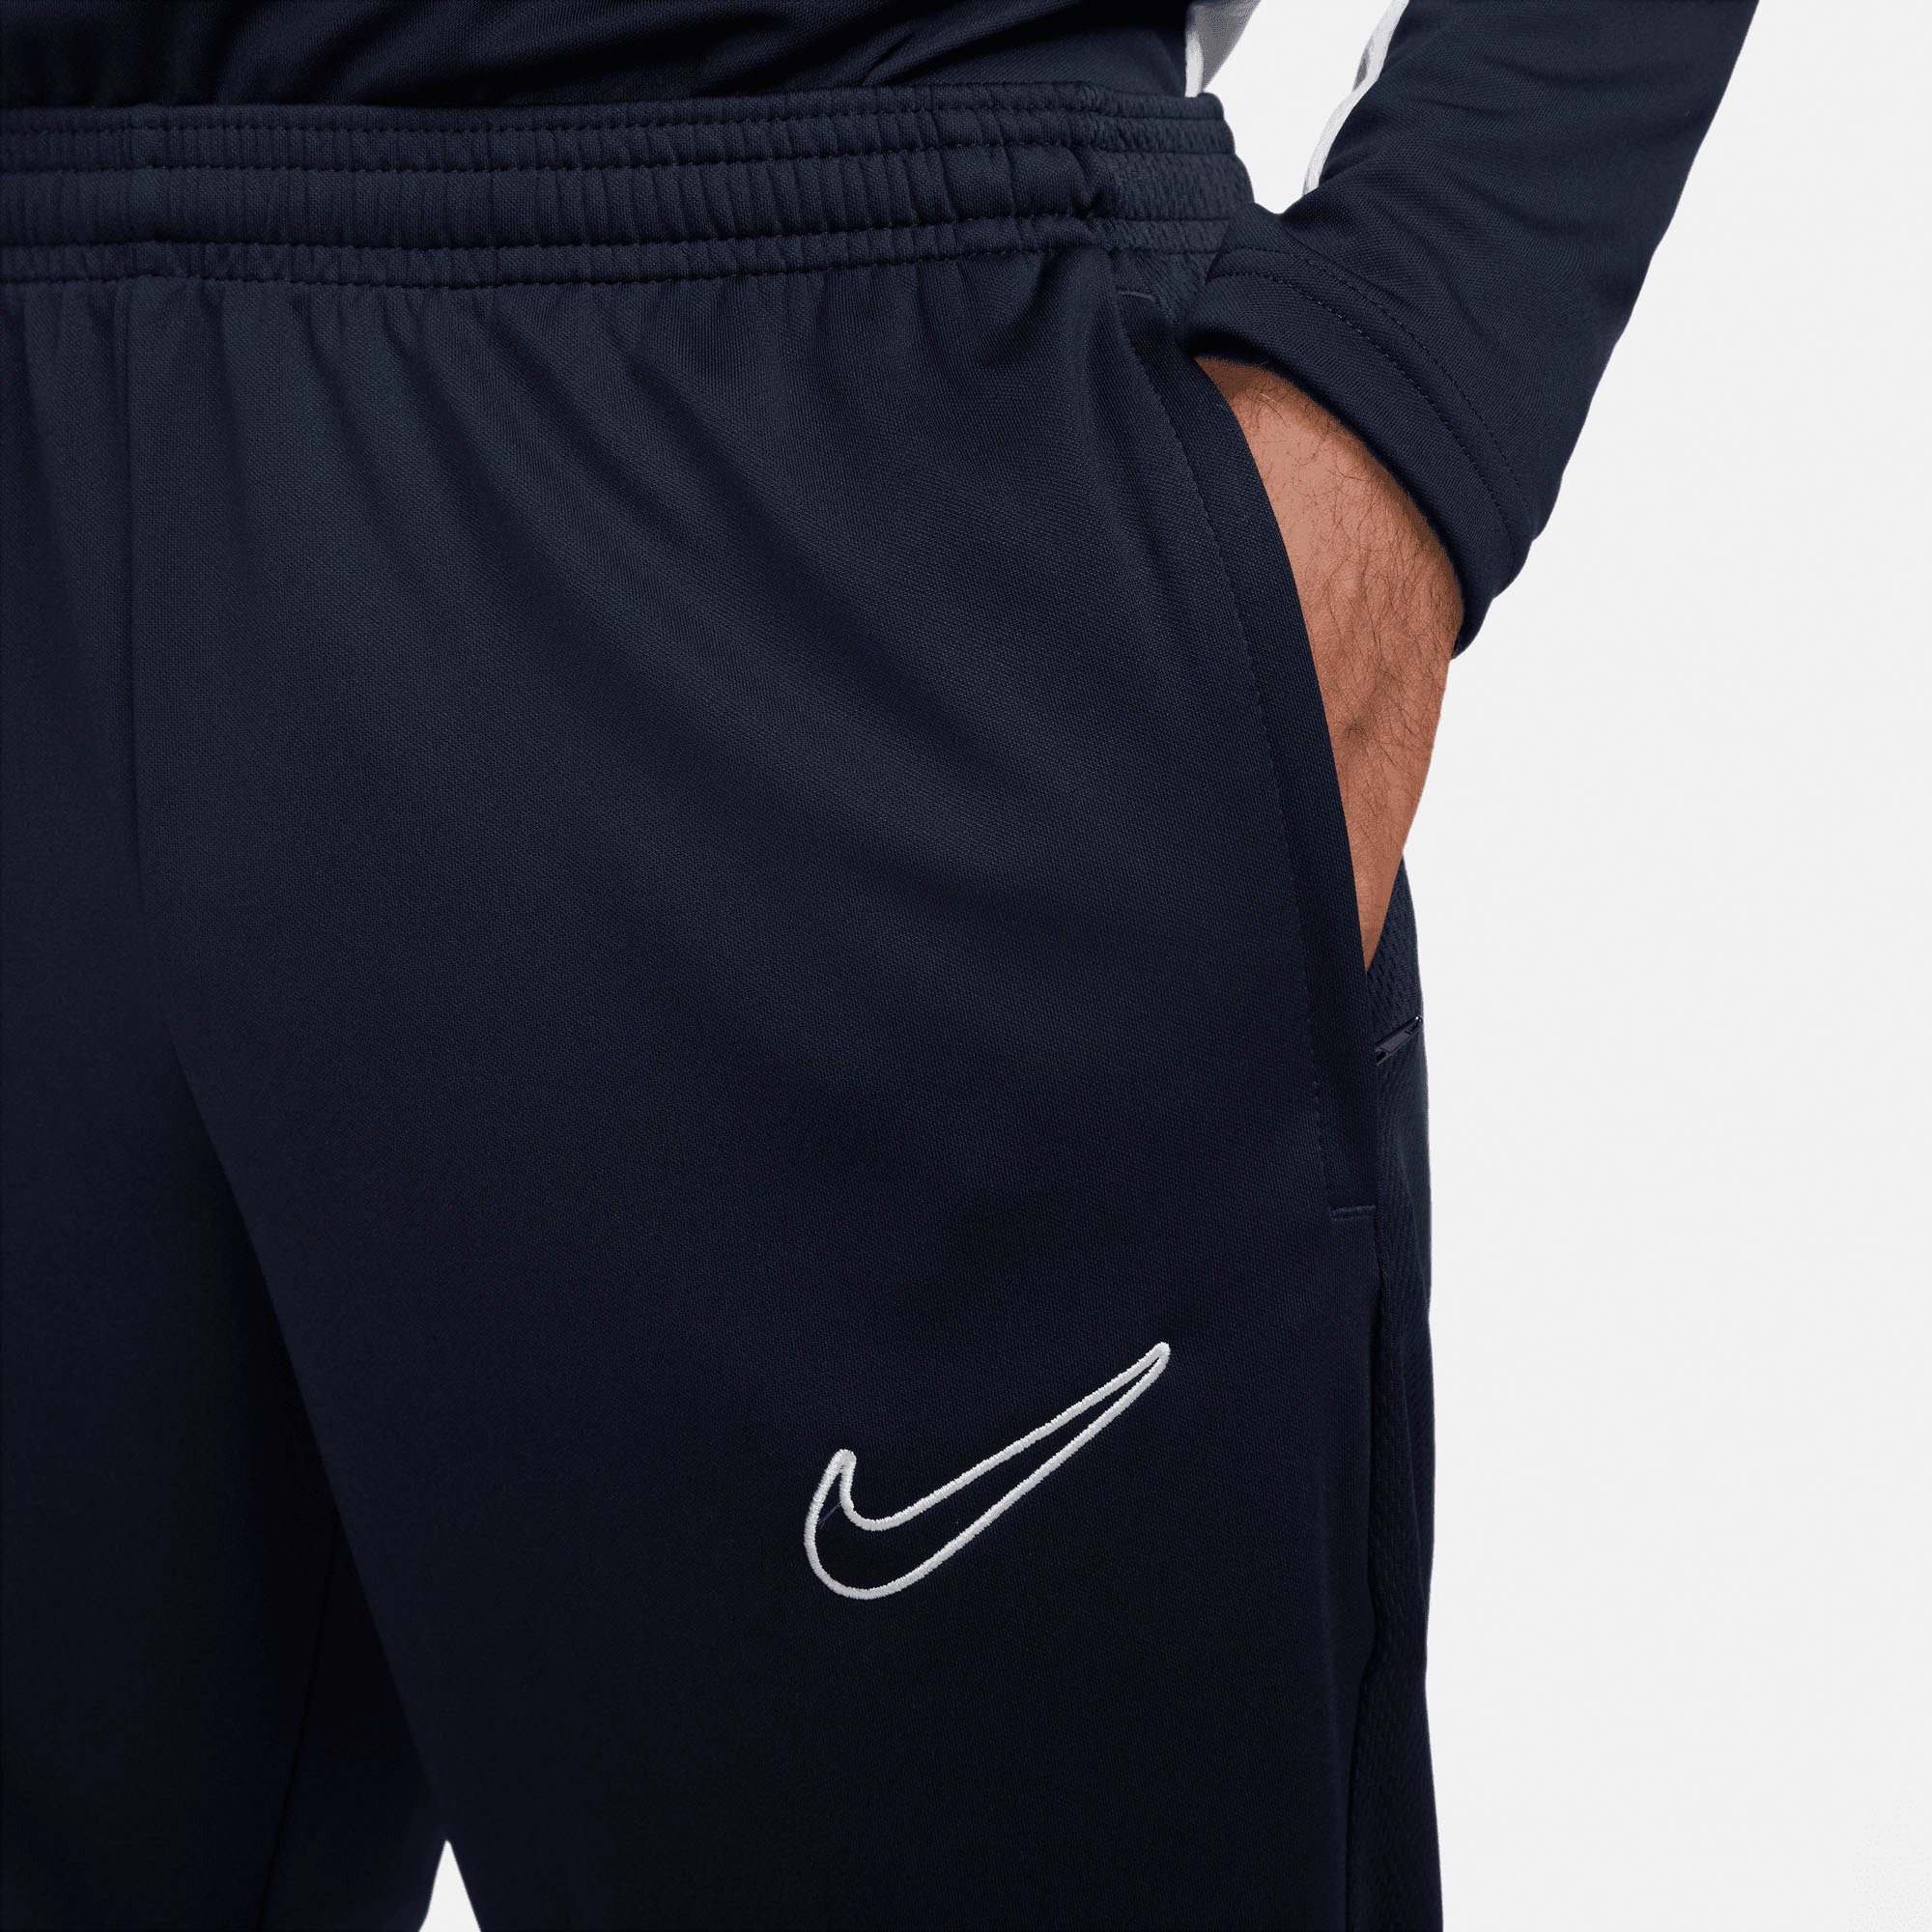 Nike Dri-FIT OBSIDIAN/OBSIDIAN/OBSIDIAN/WHITE Zippered Pants Soccer Academy Men's Trainingshose